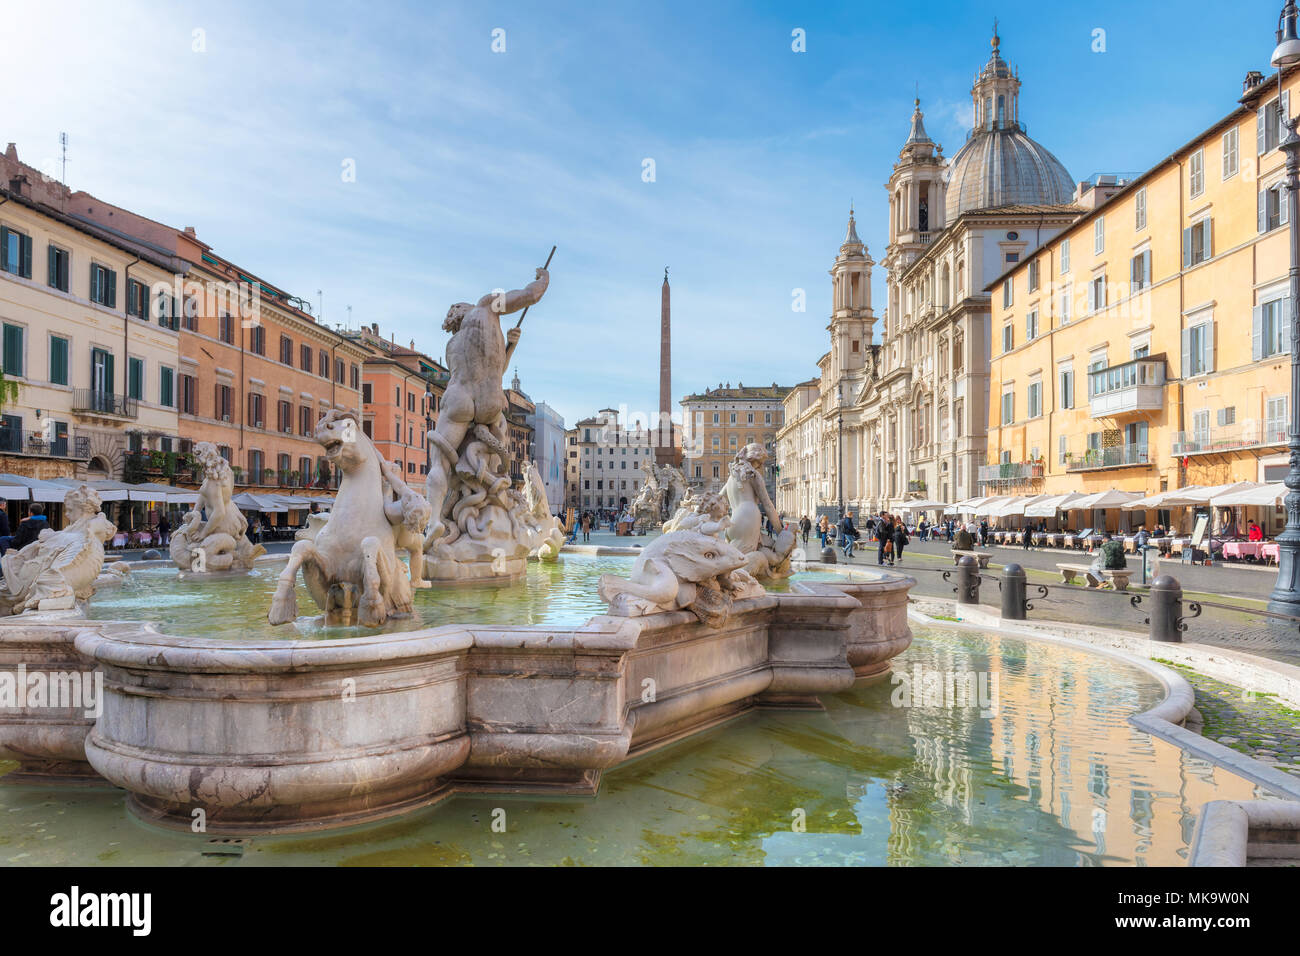 Beautiful day at Piazza Navona, Rome. Italy. Stock Photo